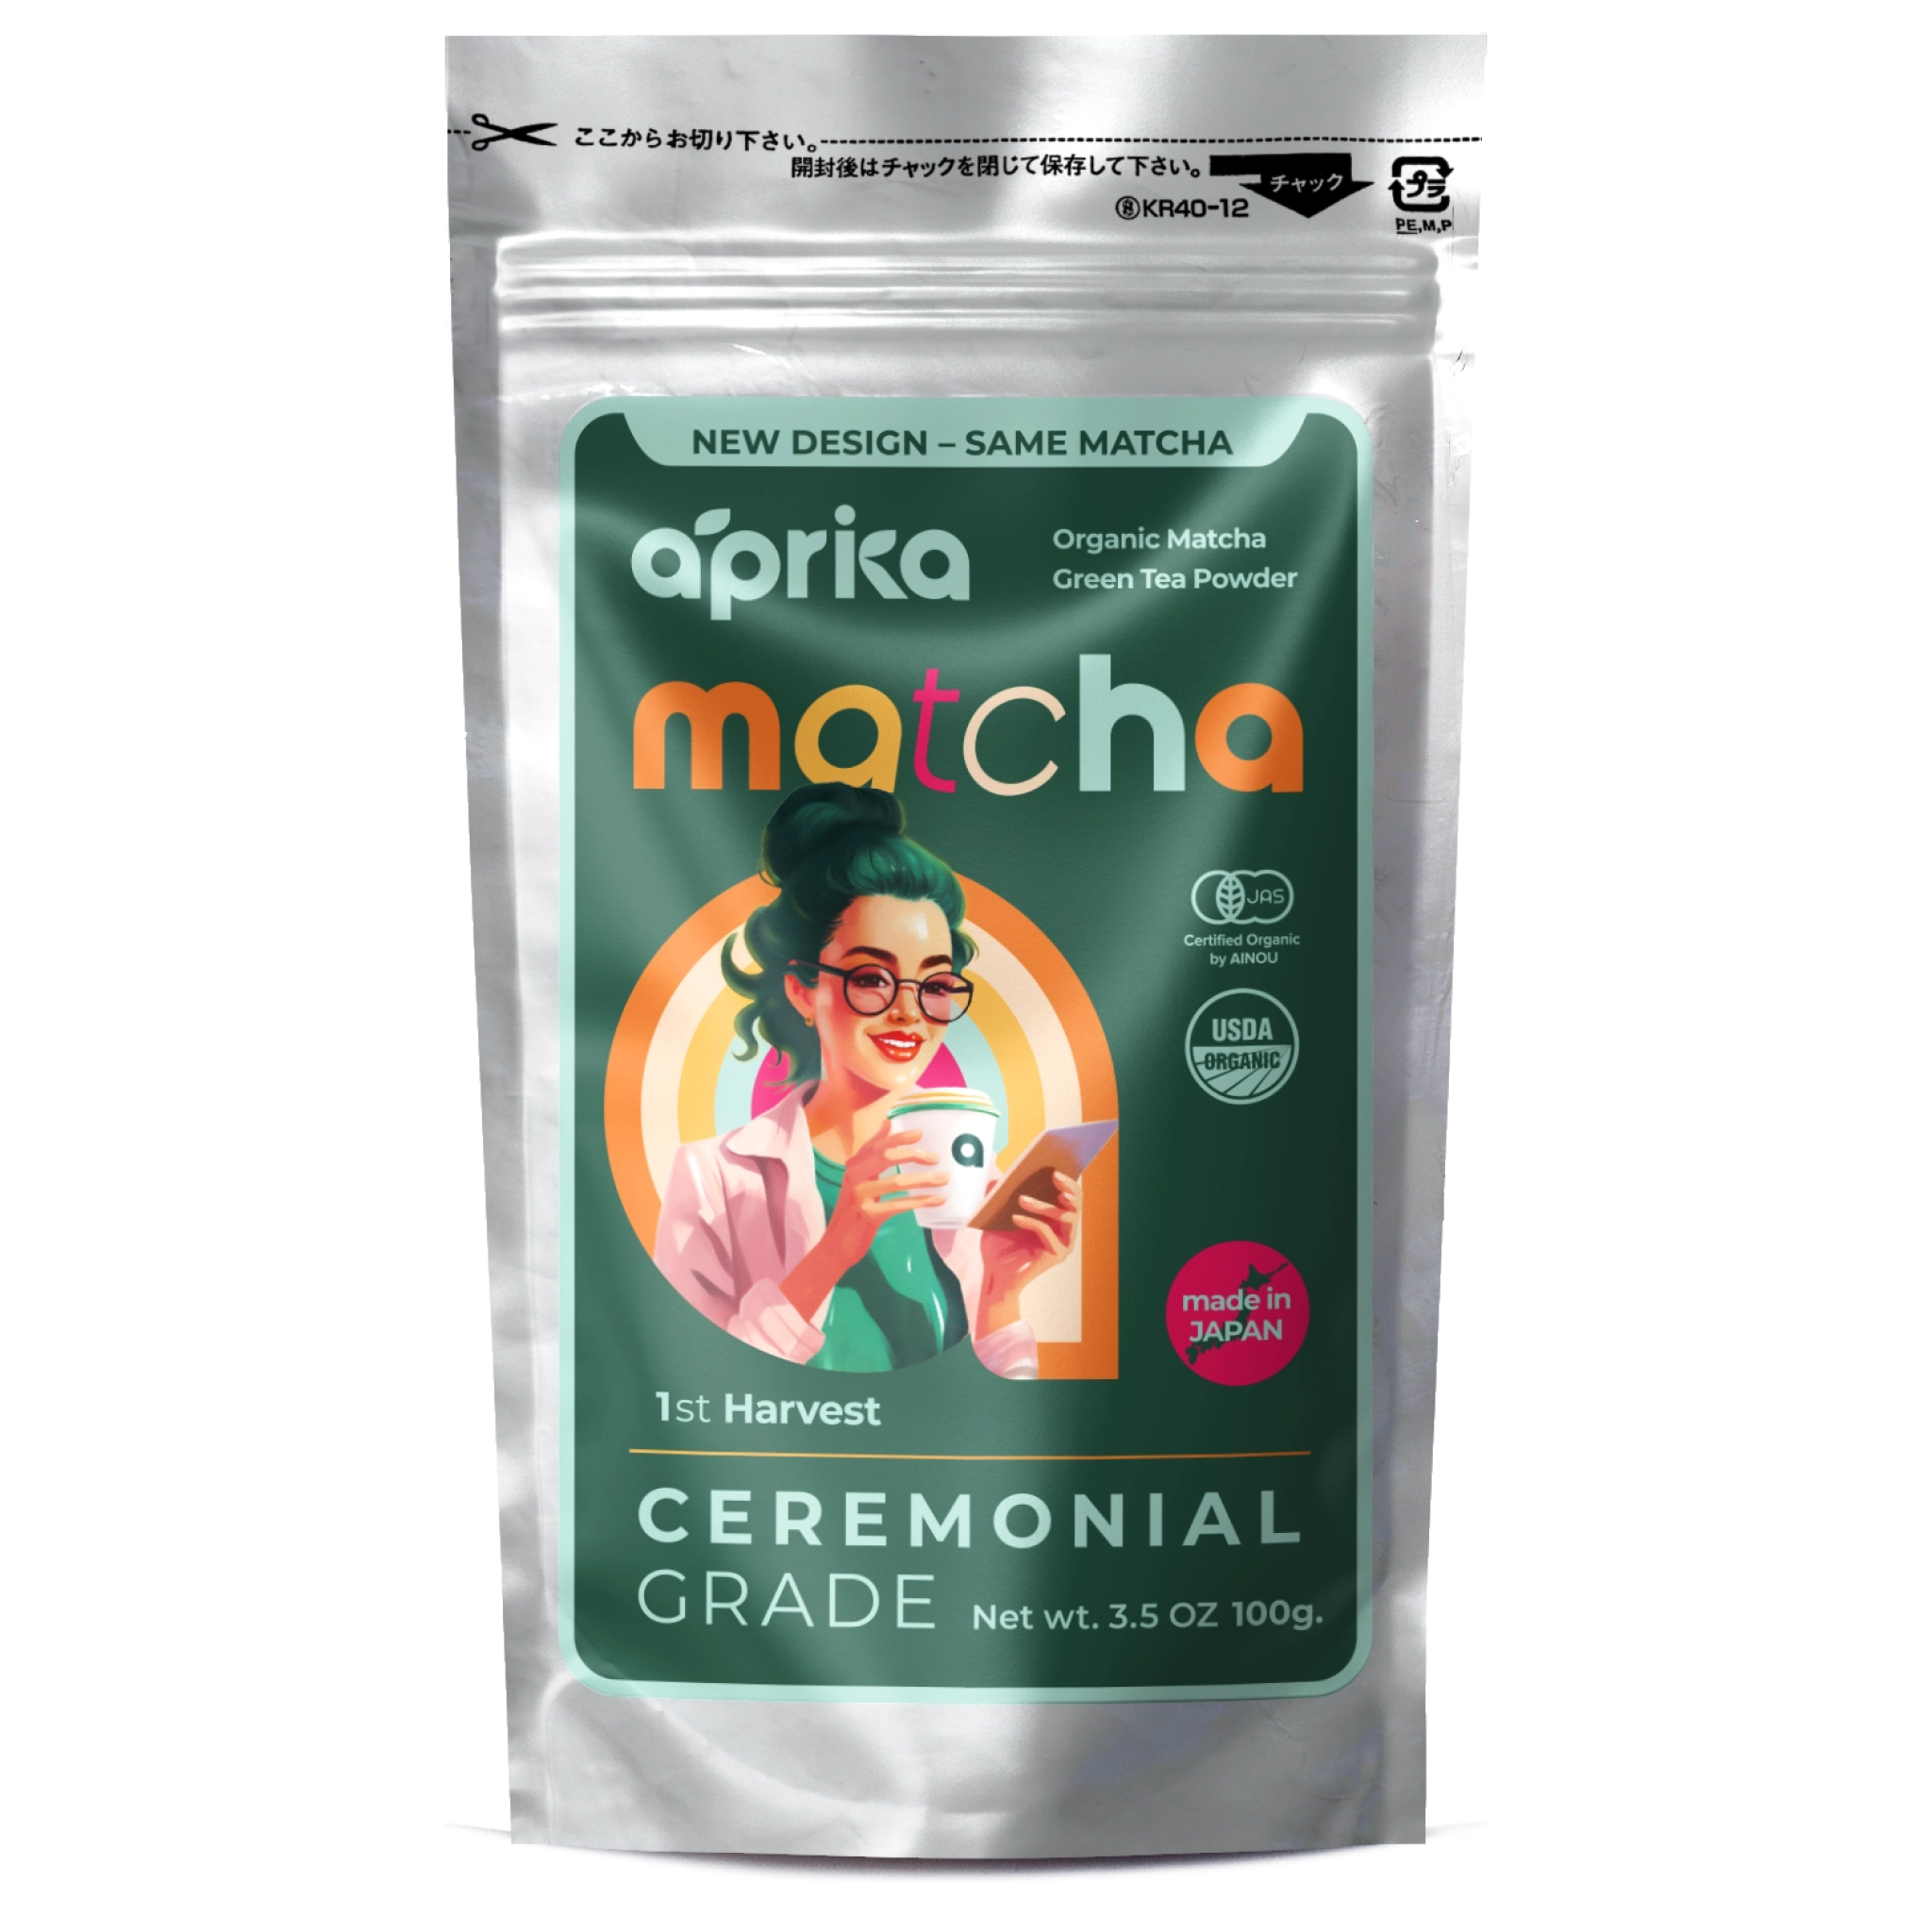 Buy Matcha Green Tea Whisk (100 Prongs) – aprikamatcha – Aprika Life